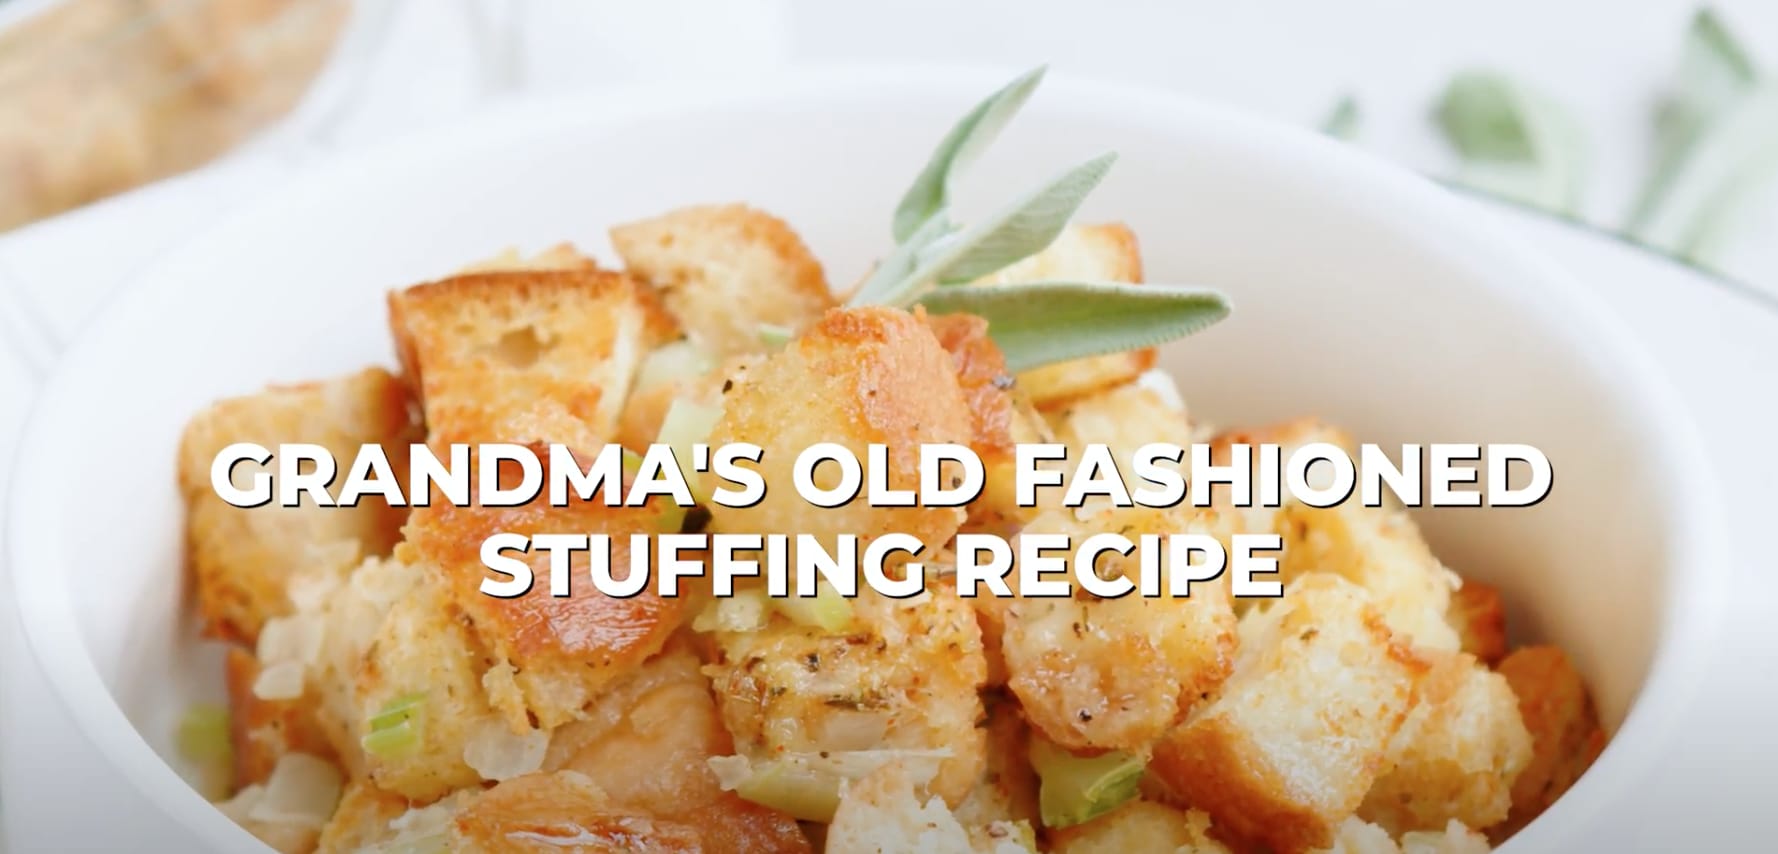 Grandma's Old Fashioned Stuffing Recipe - Lauren's Latest